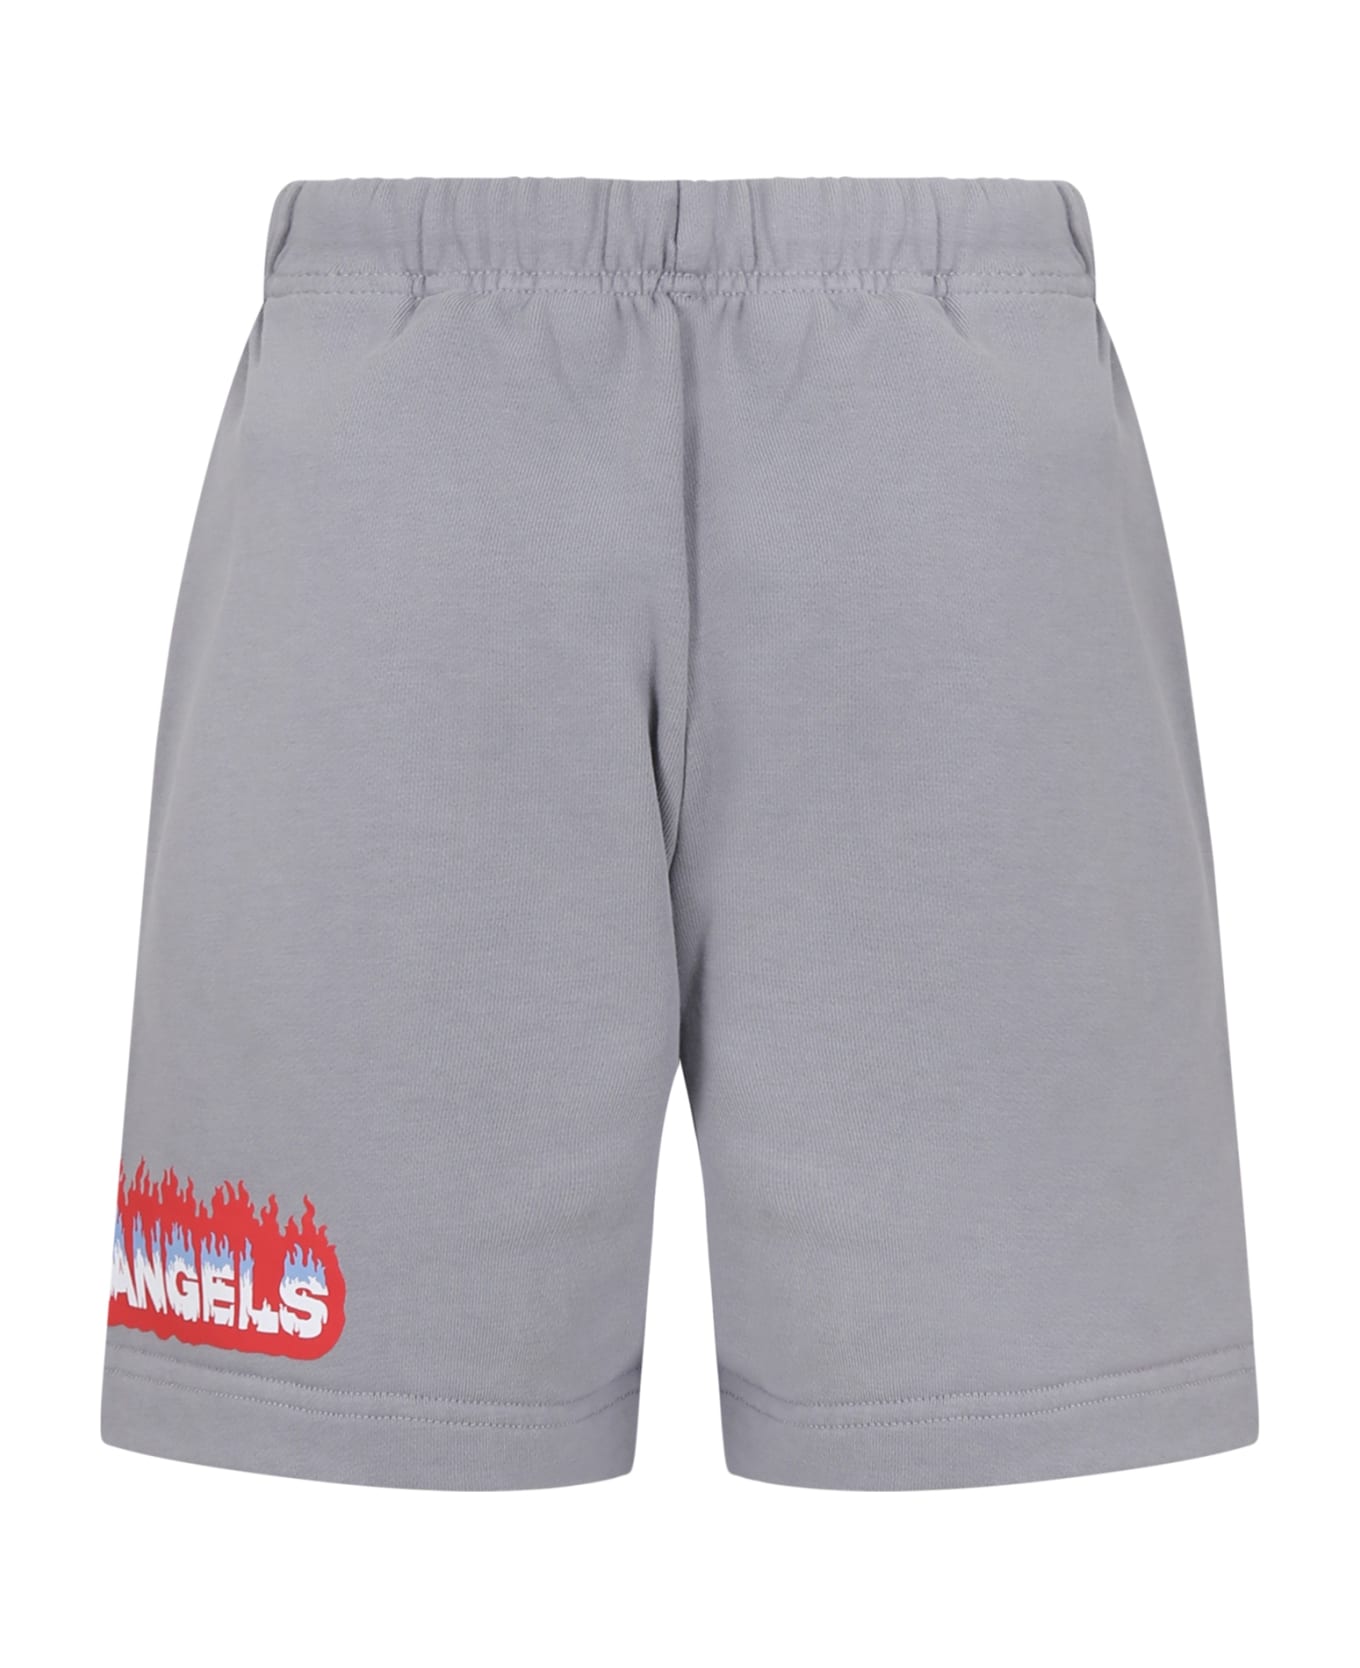 Palm Angels Grey Shorts For Boy With Logo - Grey